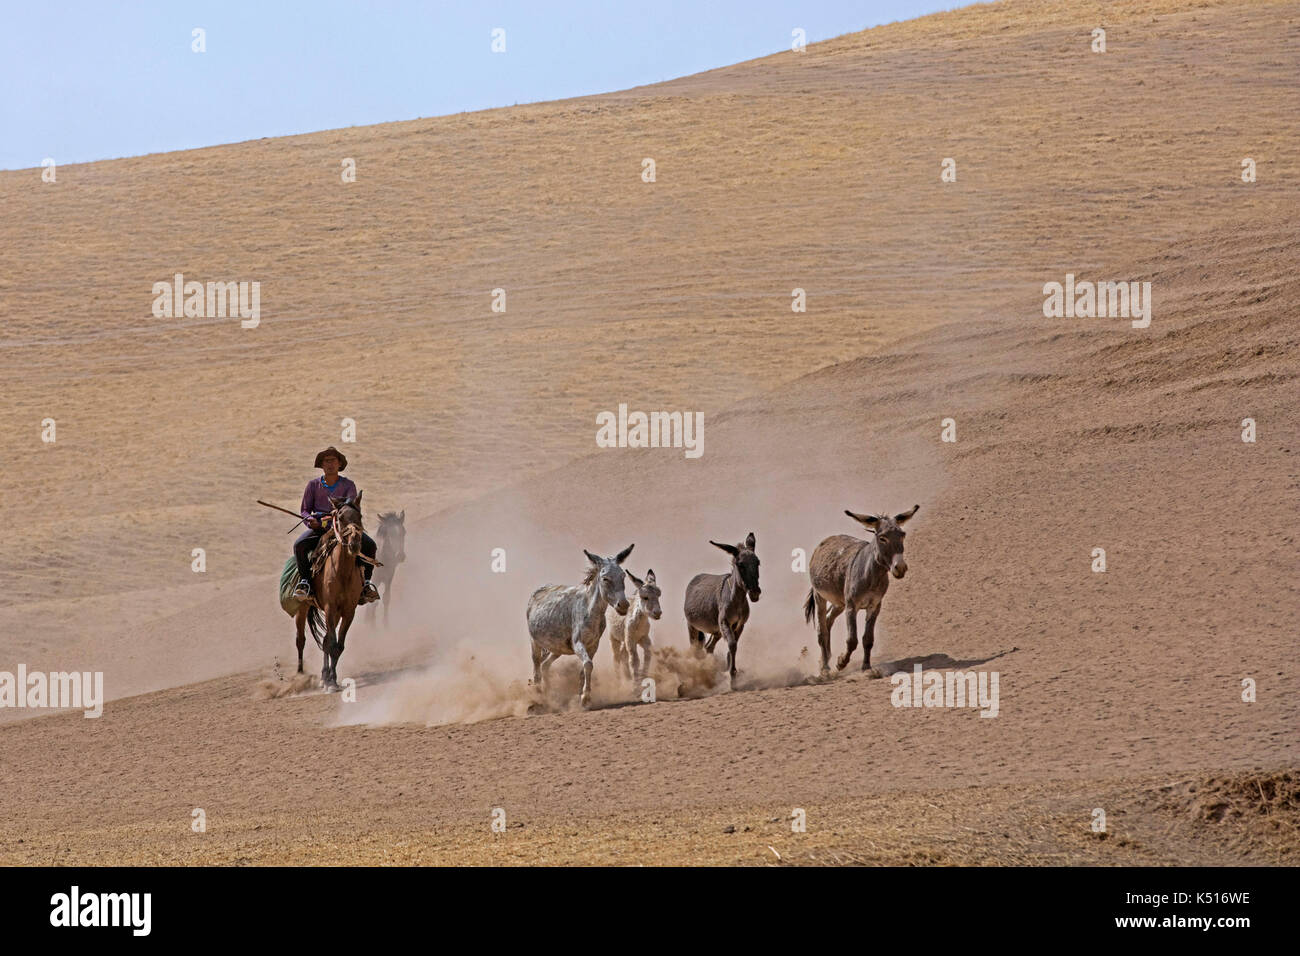 Tajik shepherd on horseback herding donkeys in desert along the Pamir Highway in Tajikistan Stock Photo